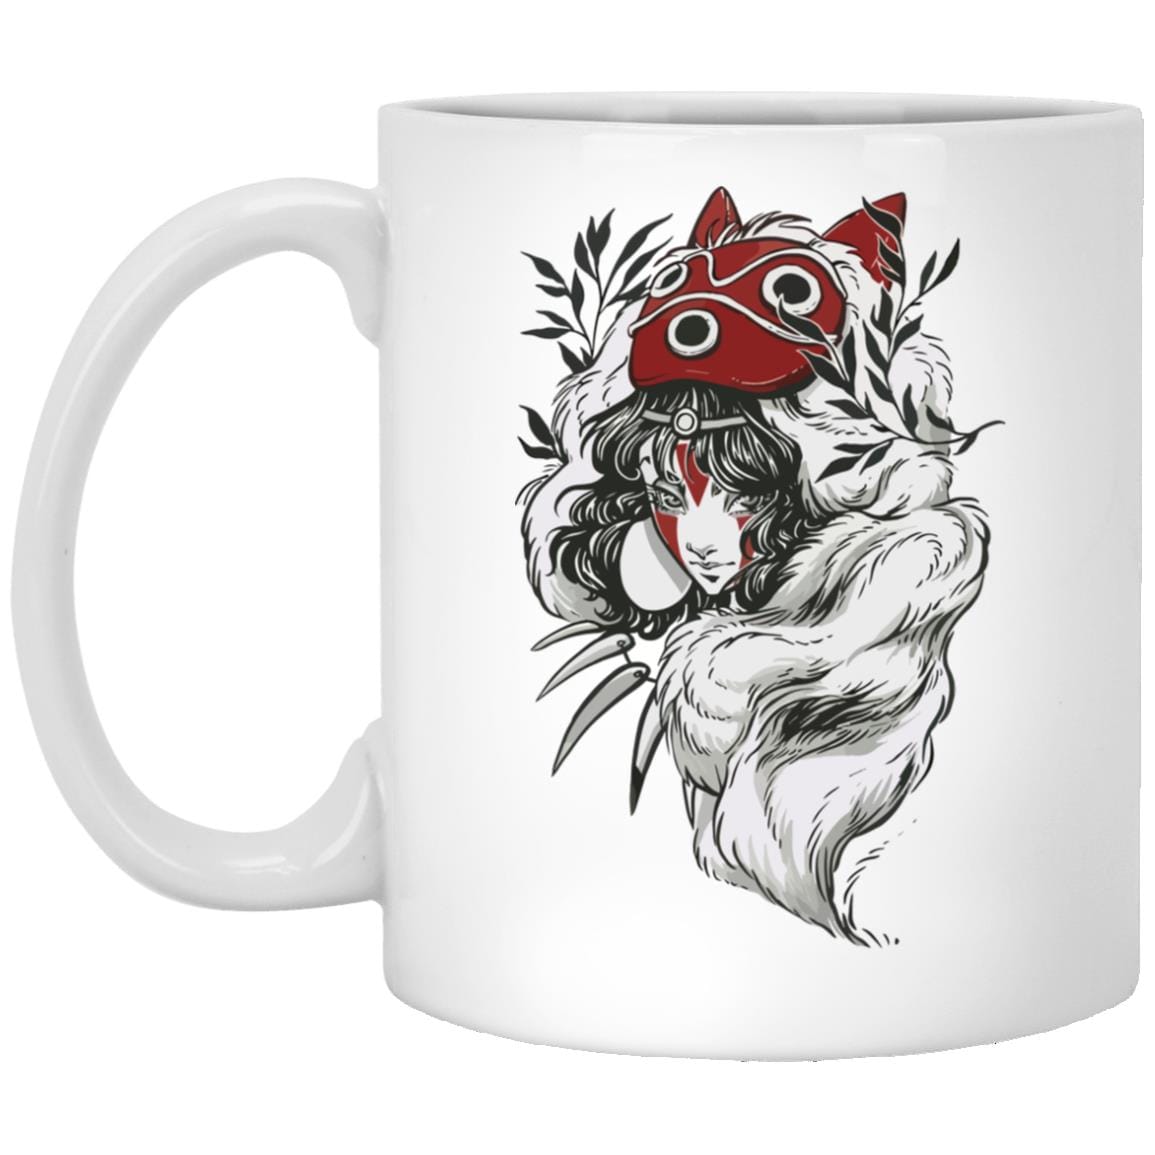 Princess Mononoke Black and White Fanart Mug